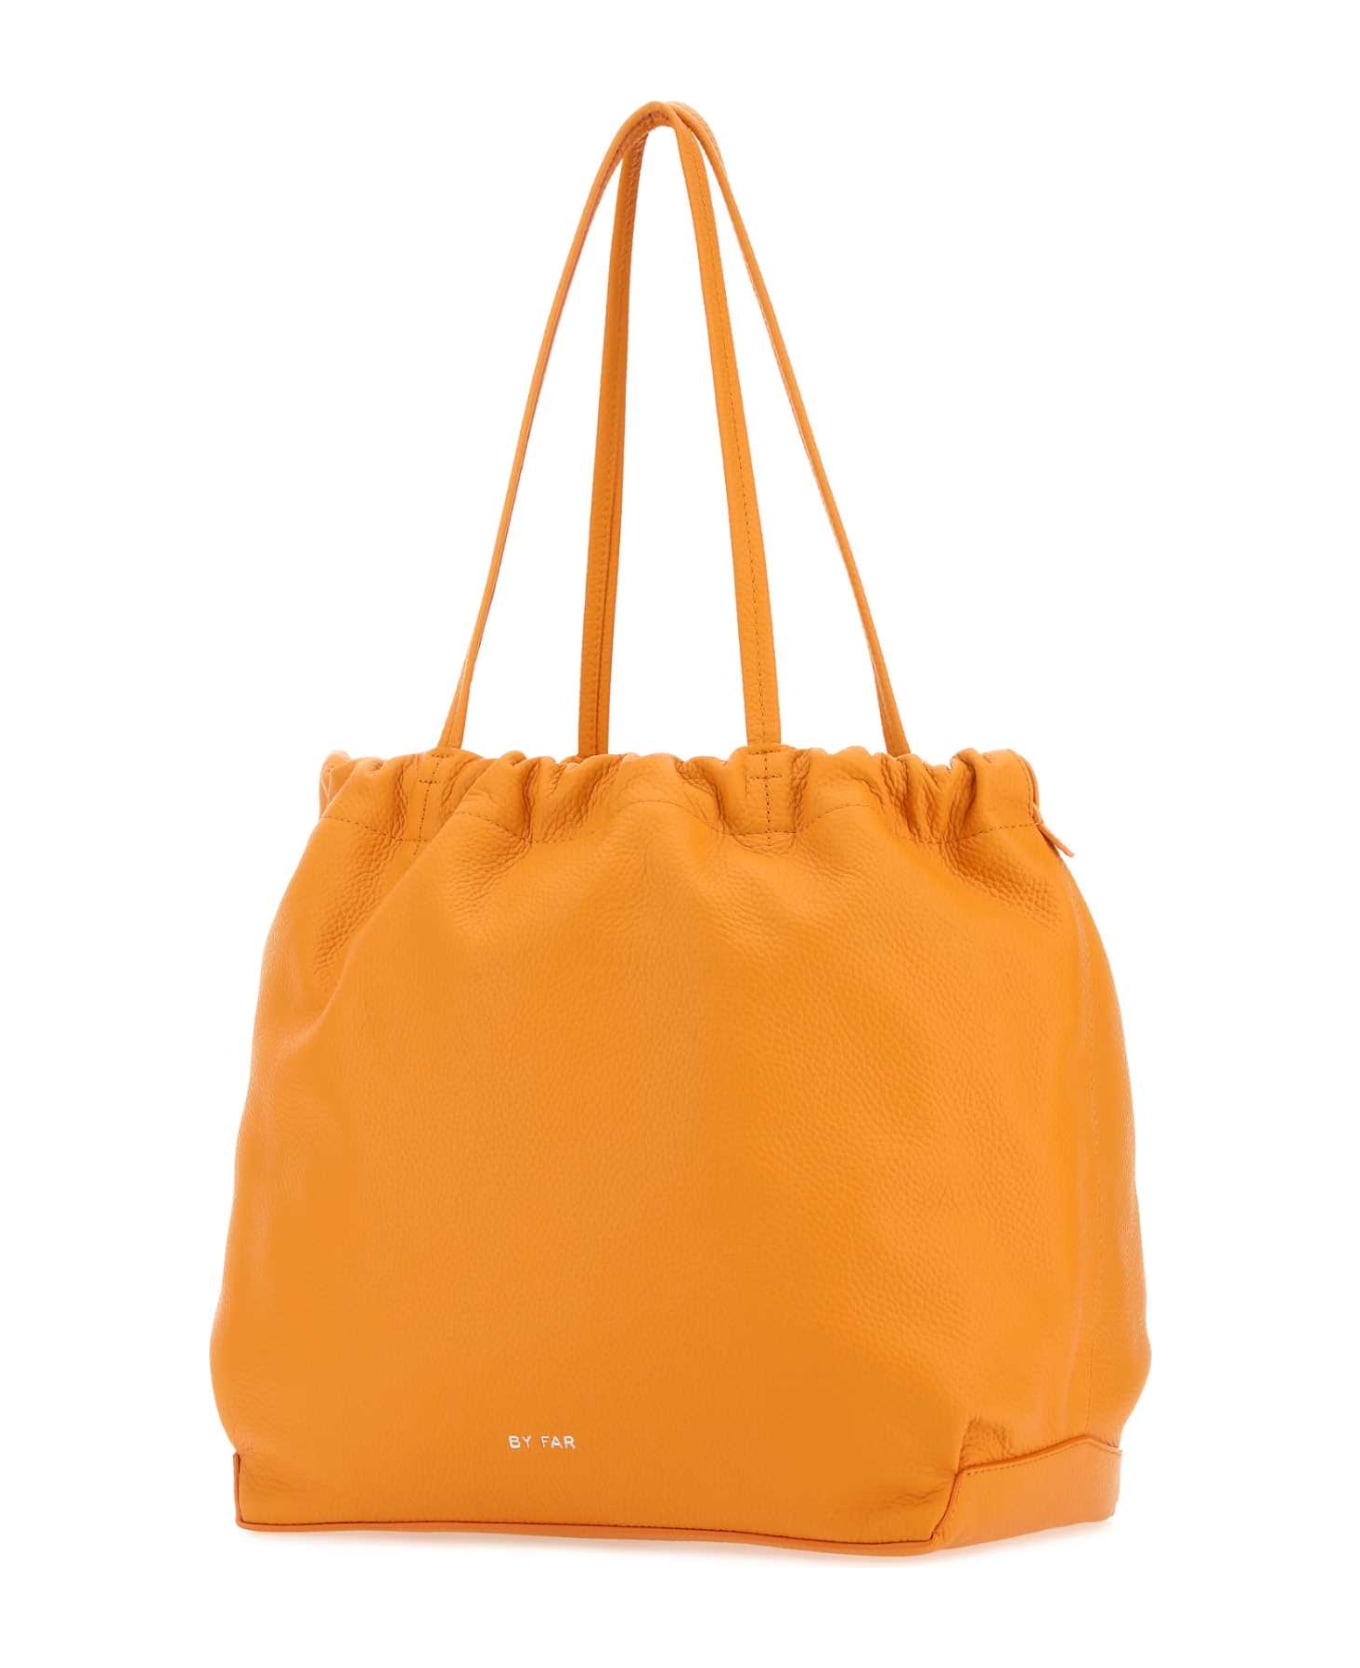 BY FAR Orange Nappa Leather Oslo Shopping Bag - Orange トートバッグ